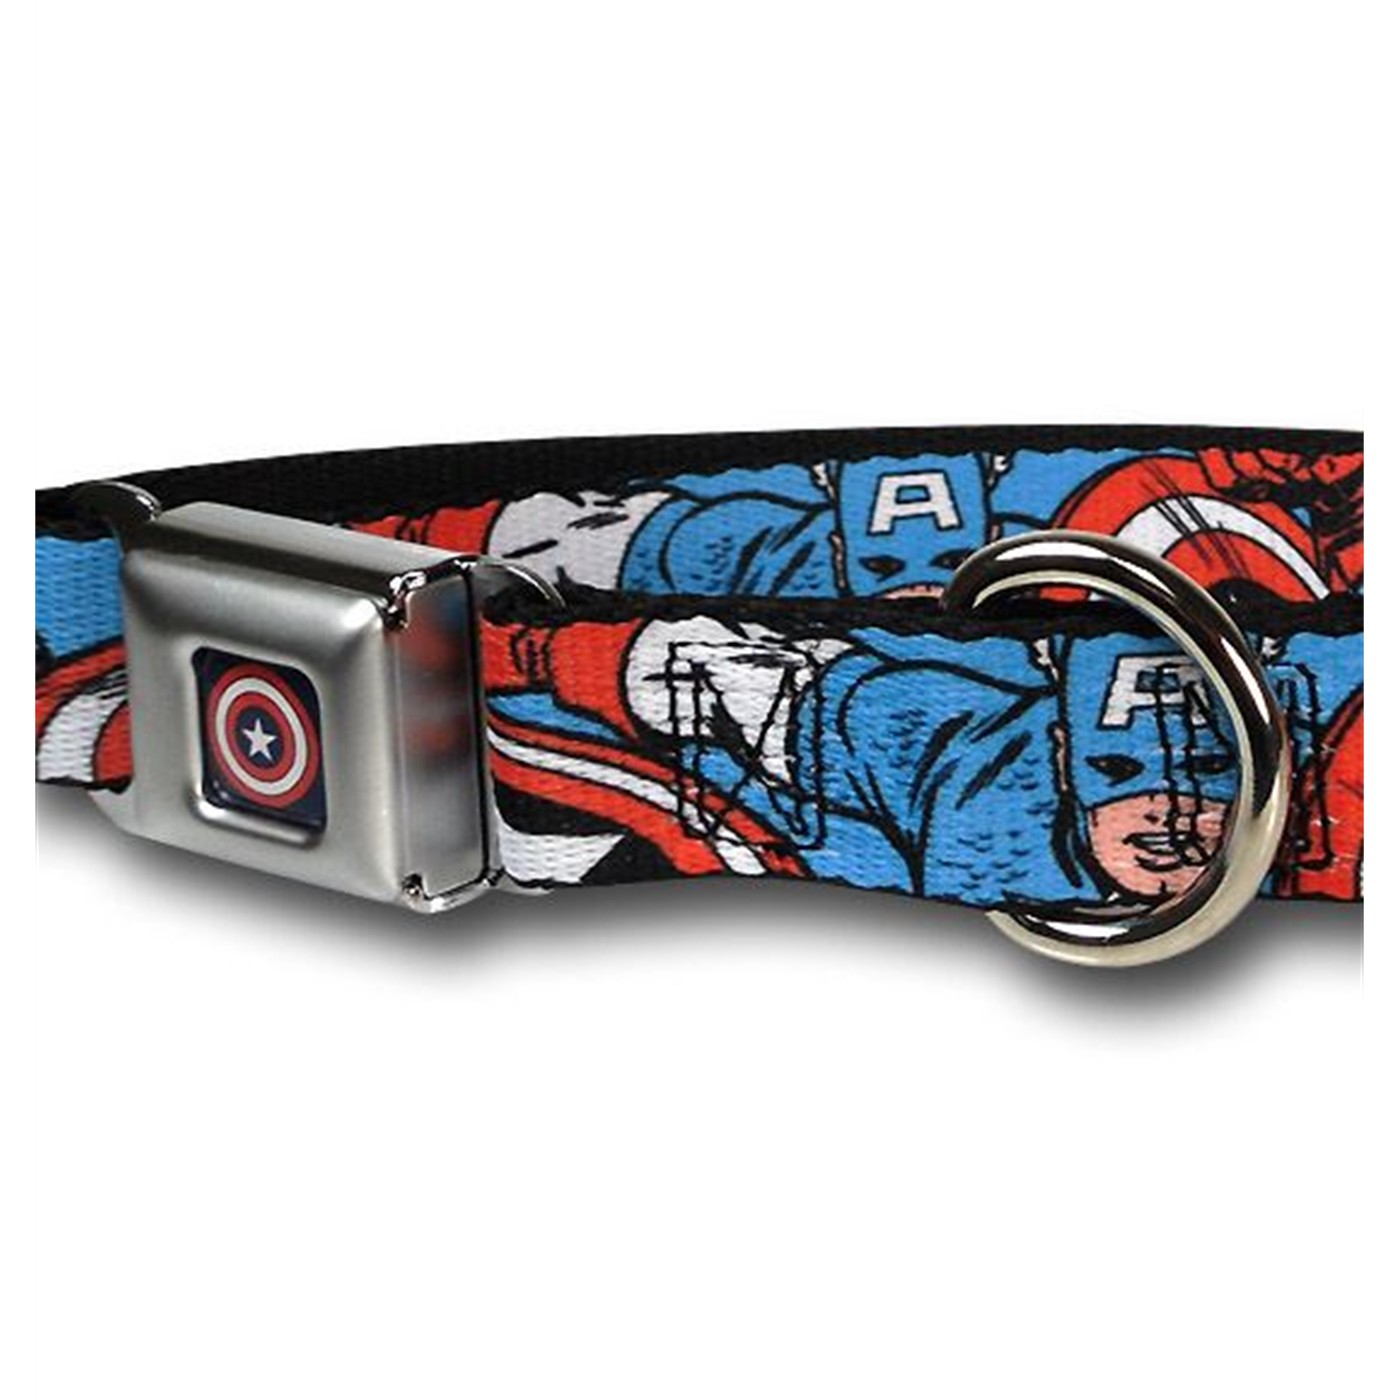 Captain America Seatbelt Dog Collar